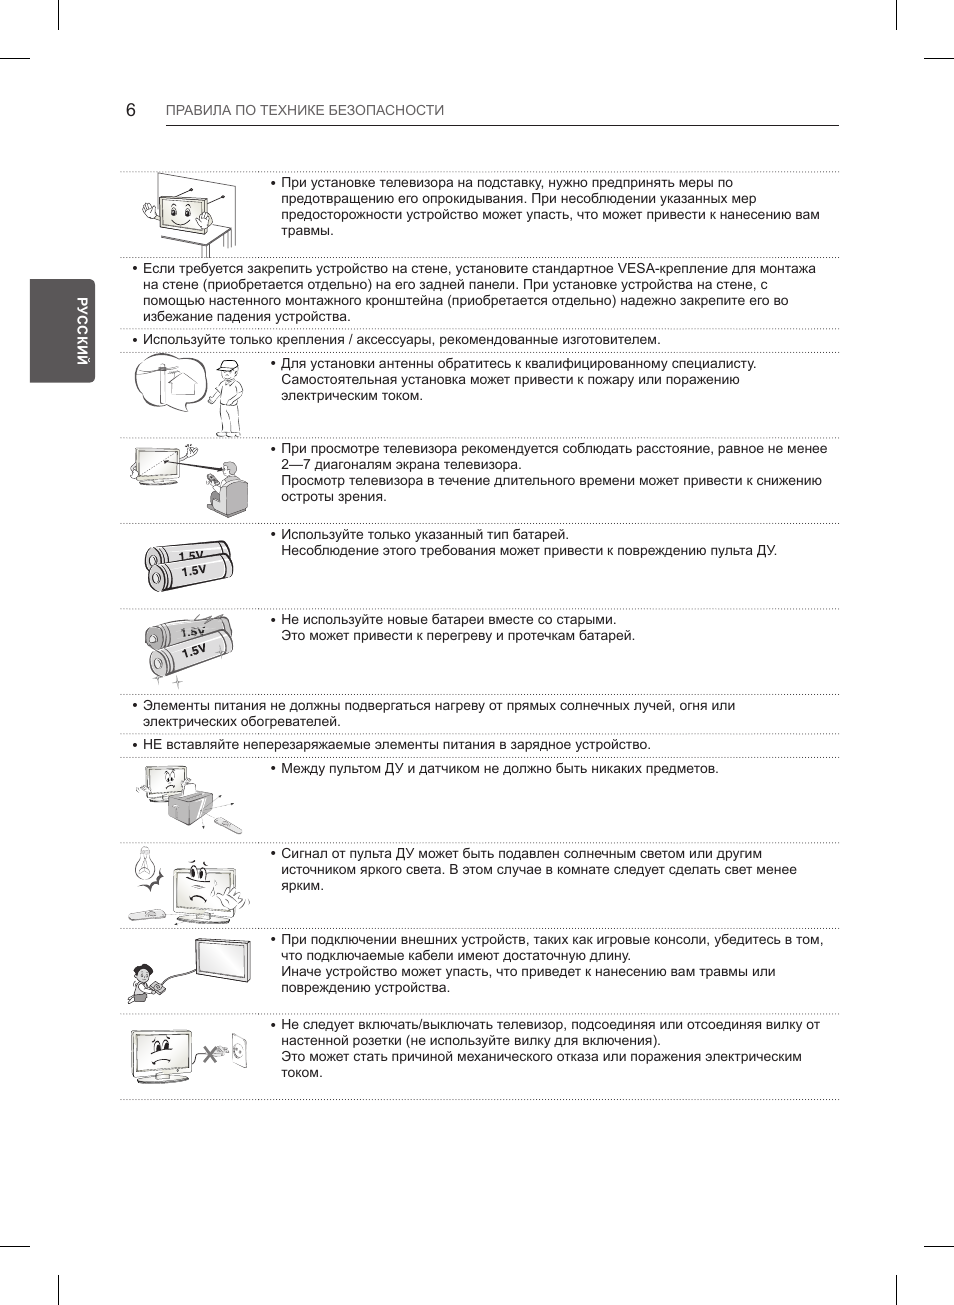 Инструкция по эксплуатации LG 32LB561U | Страница 48 / 270